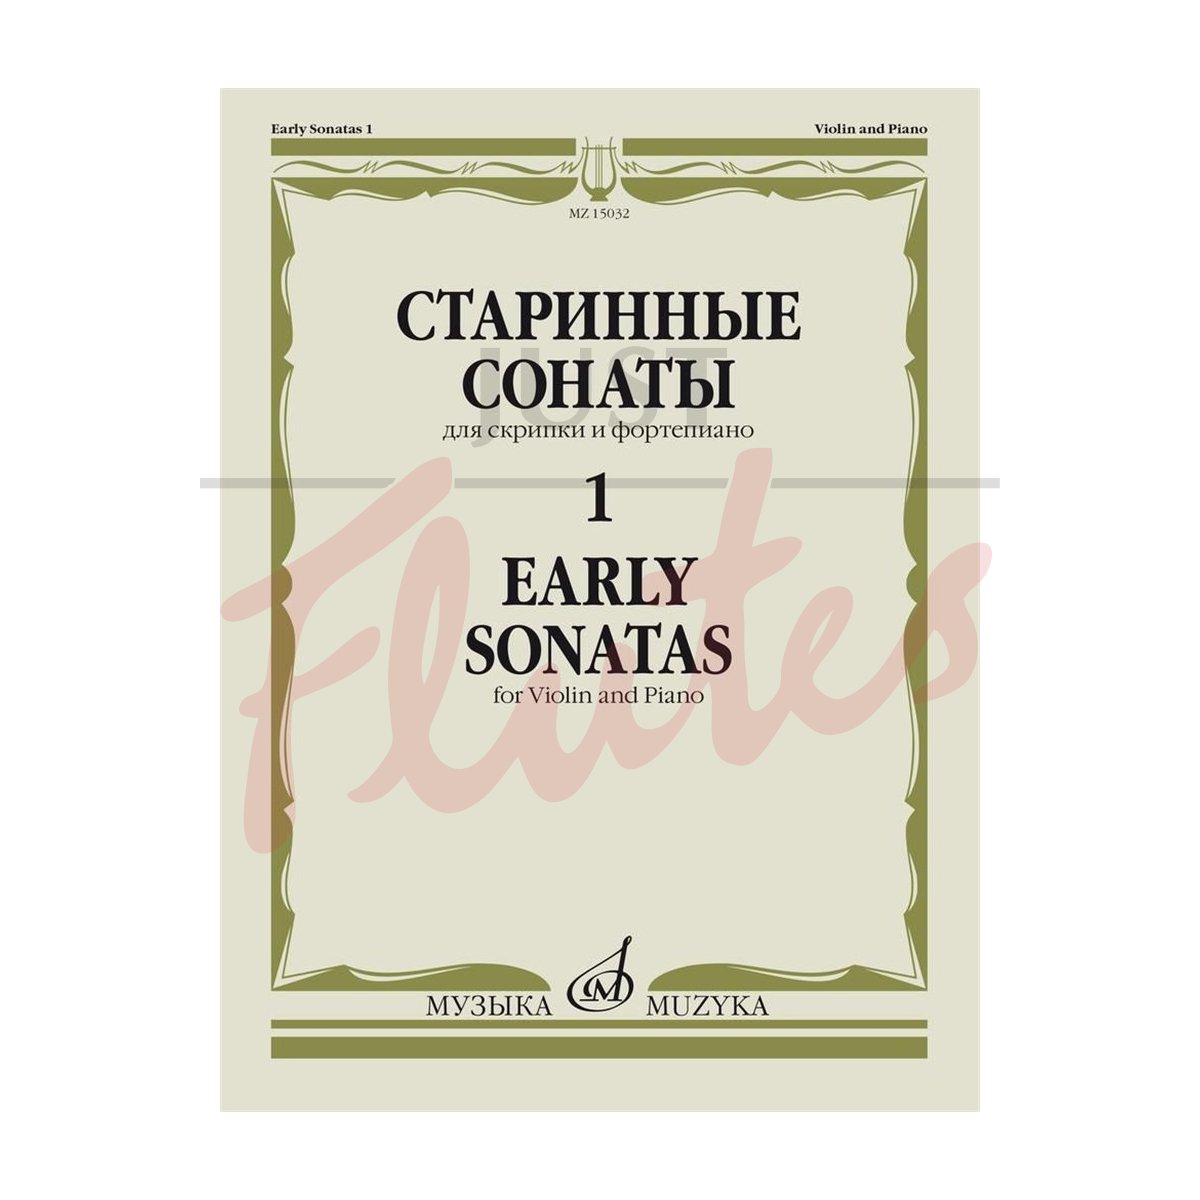 Early Sonatas for Violin and Piano, Volume 1